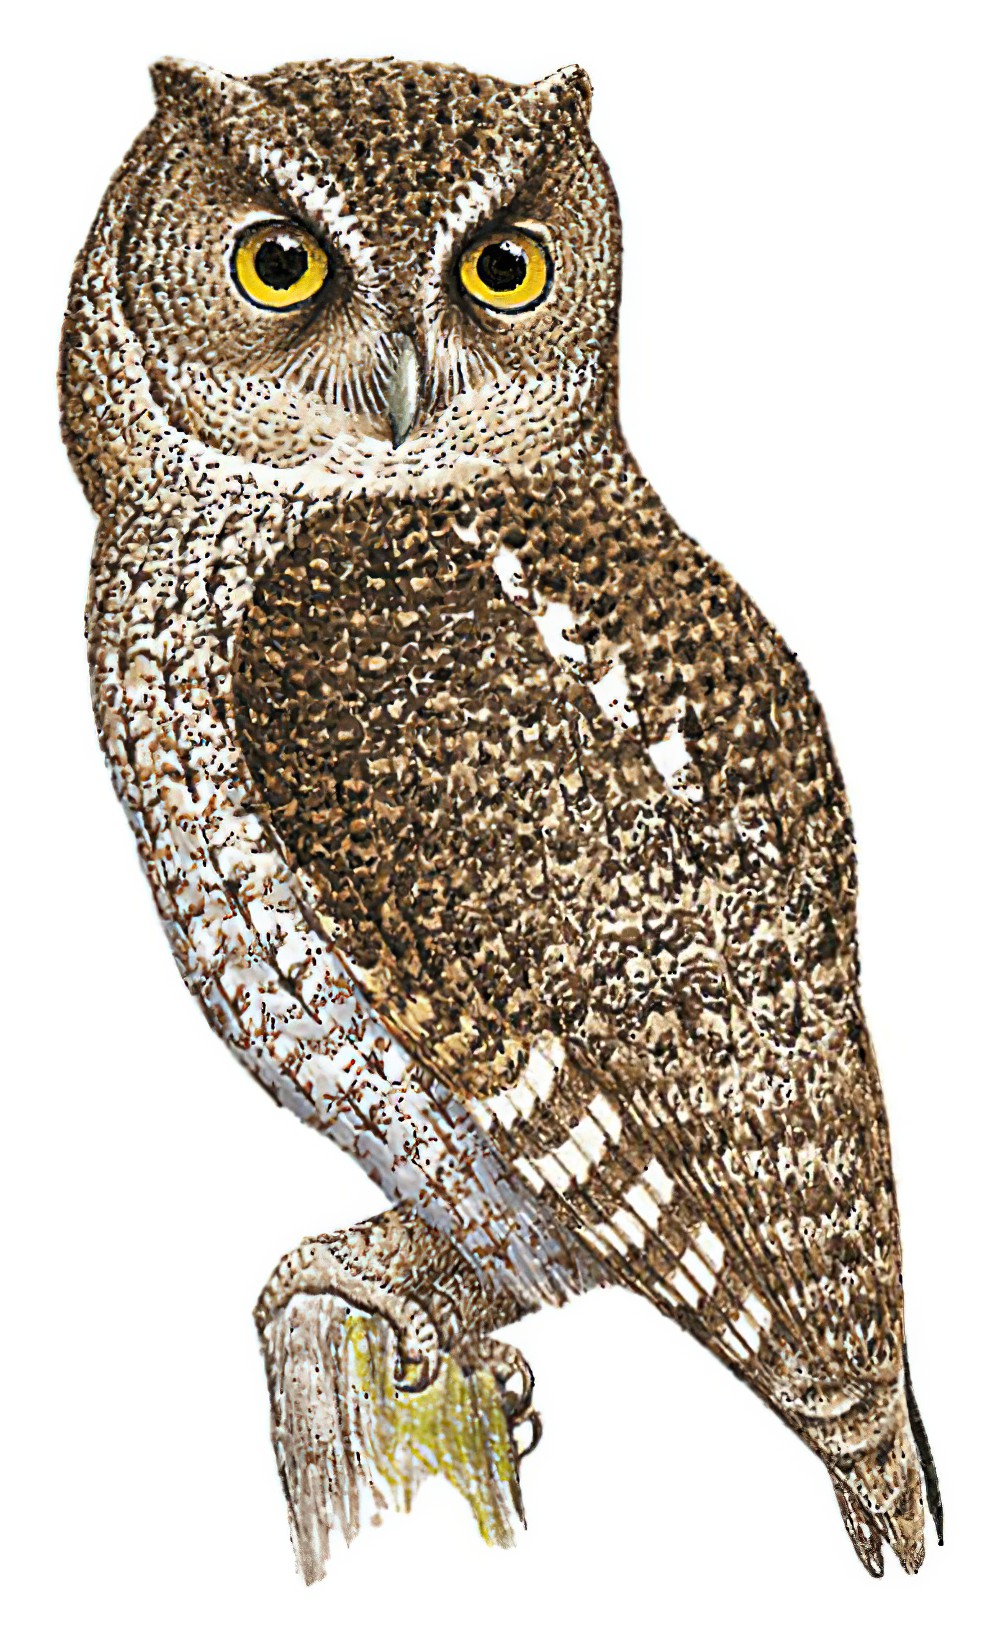 Middle American Screech-Owl / Megascops guatemalae